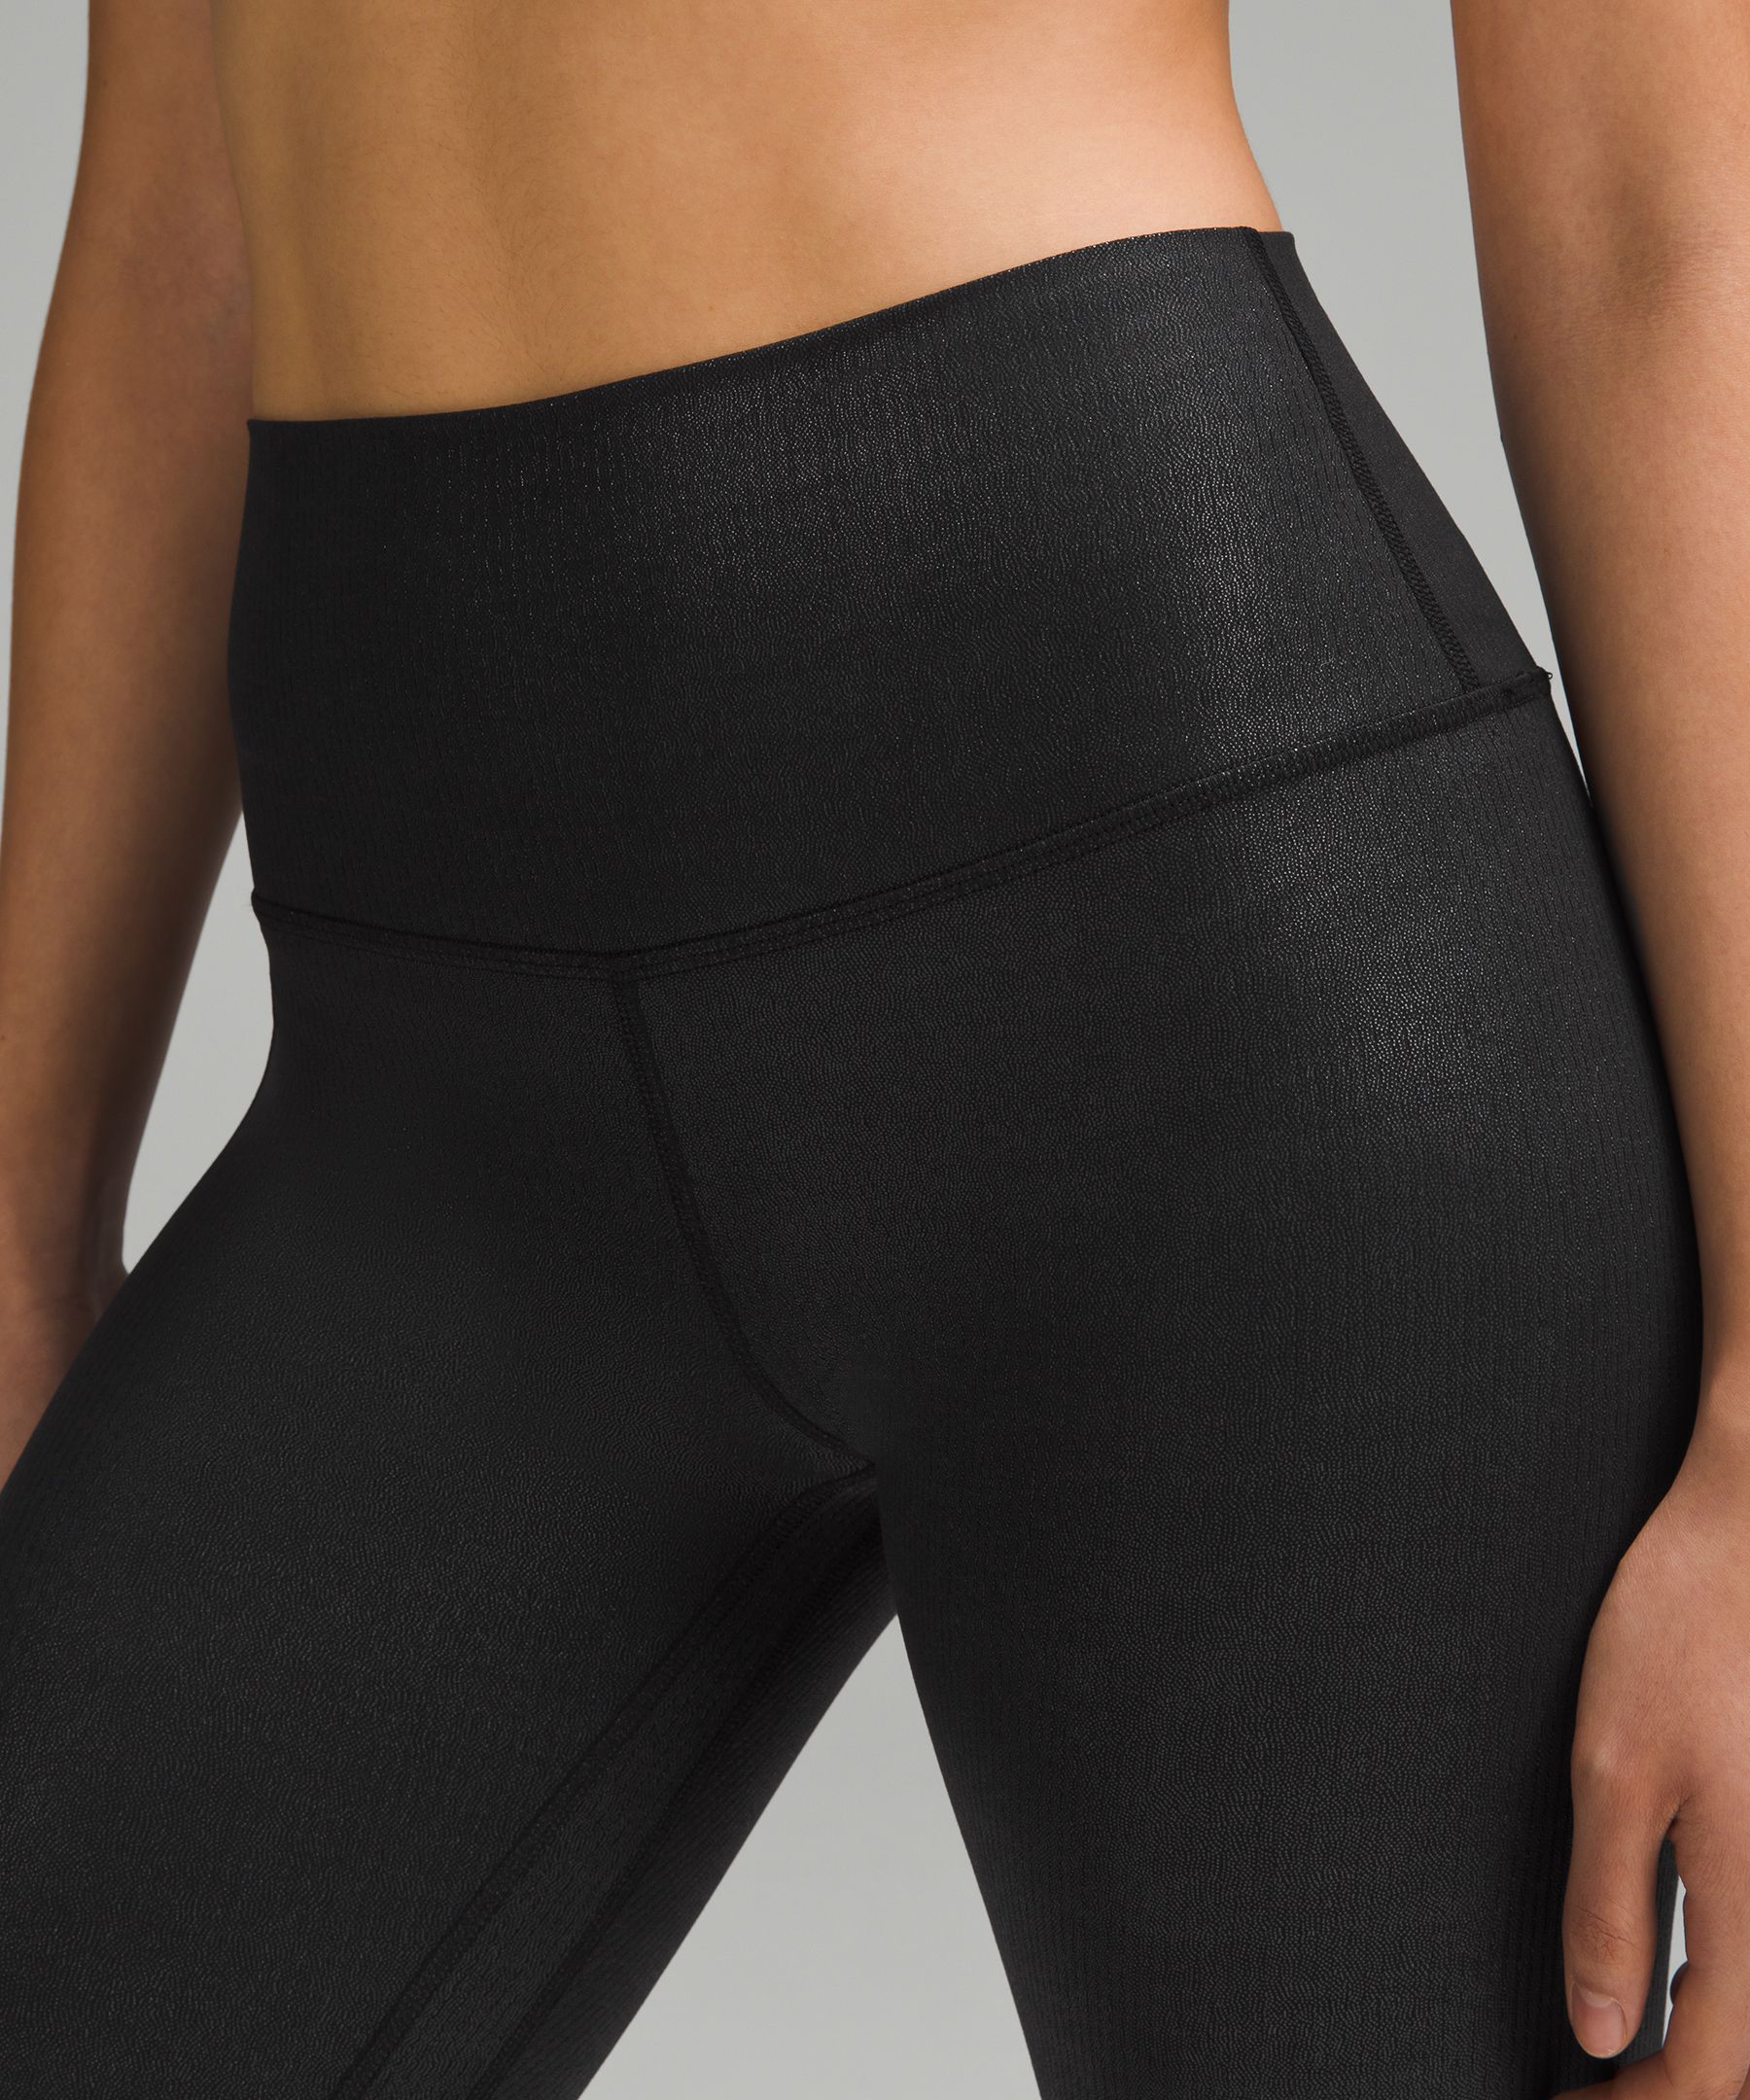 Lululemon shine pants-interesting workout leggings.